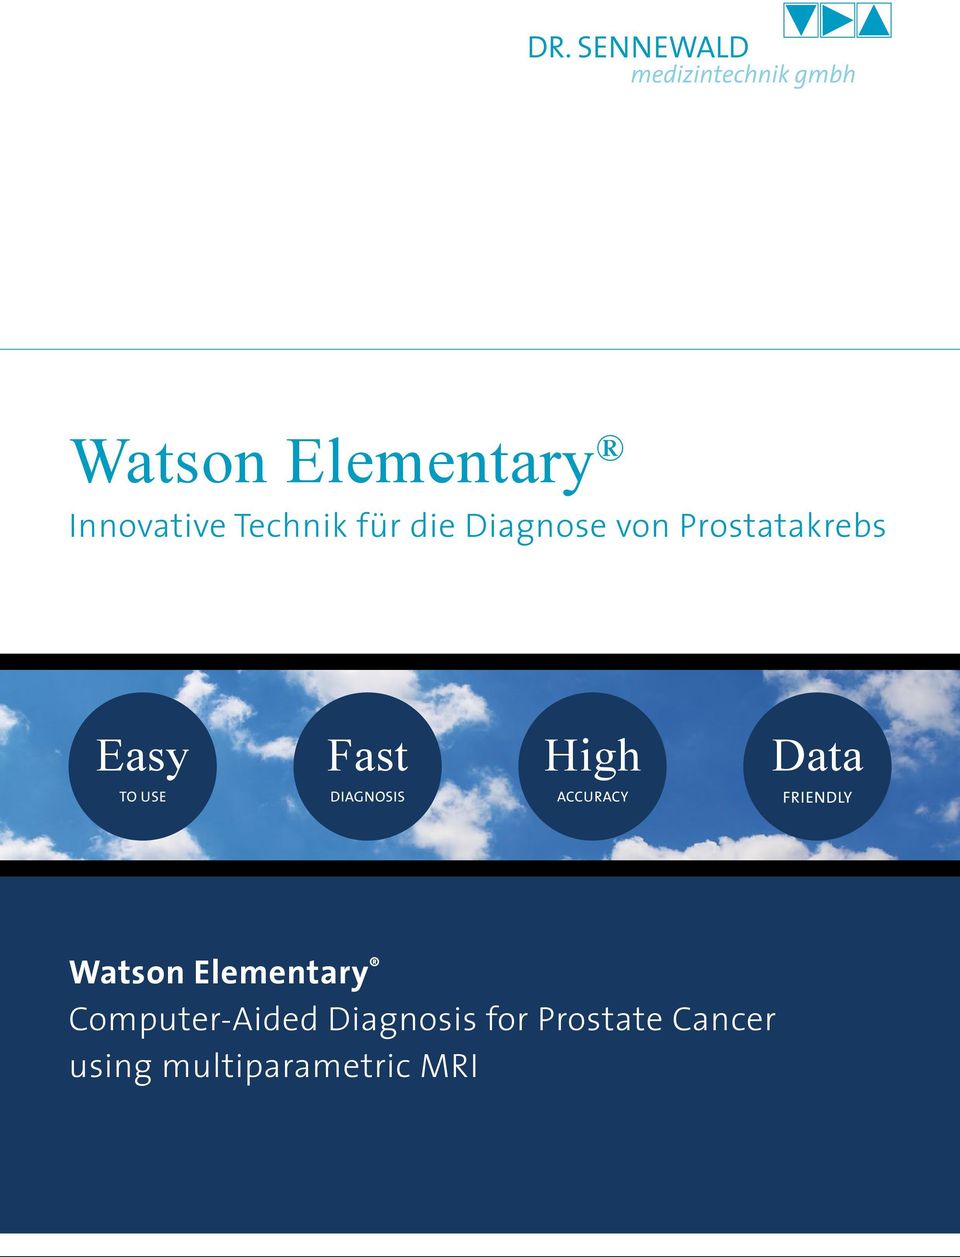 diagnosis accuracy friendly Watson Elementary